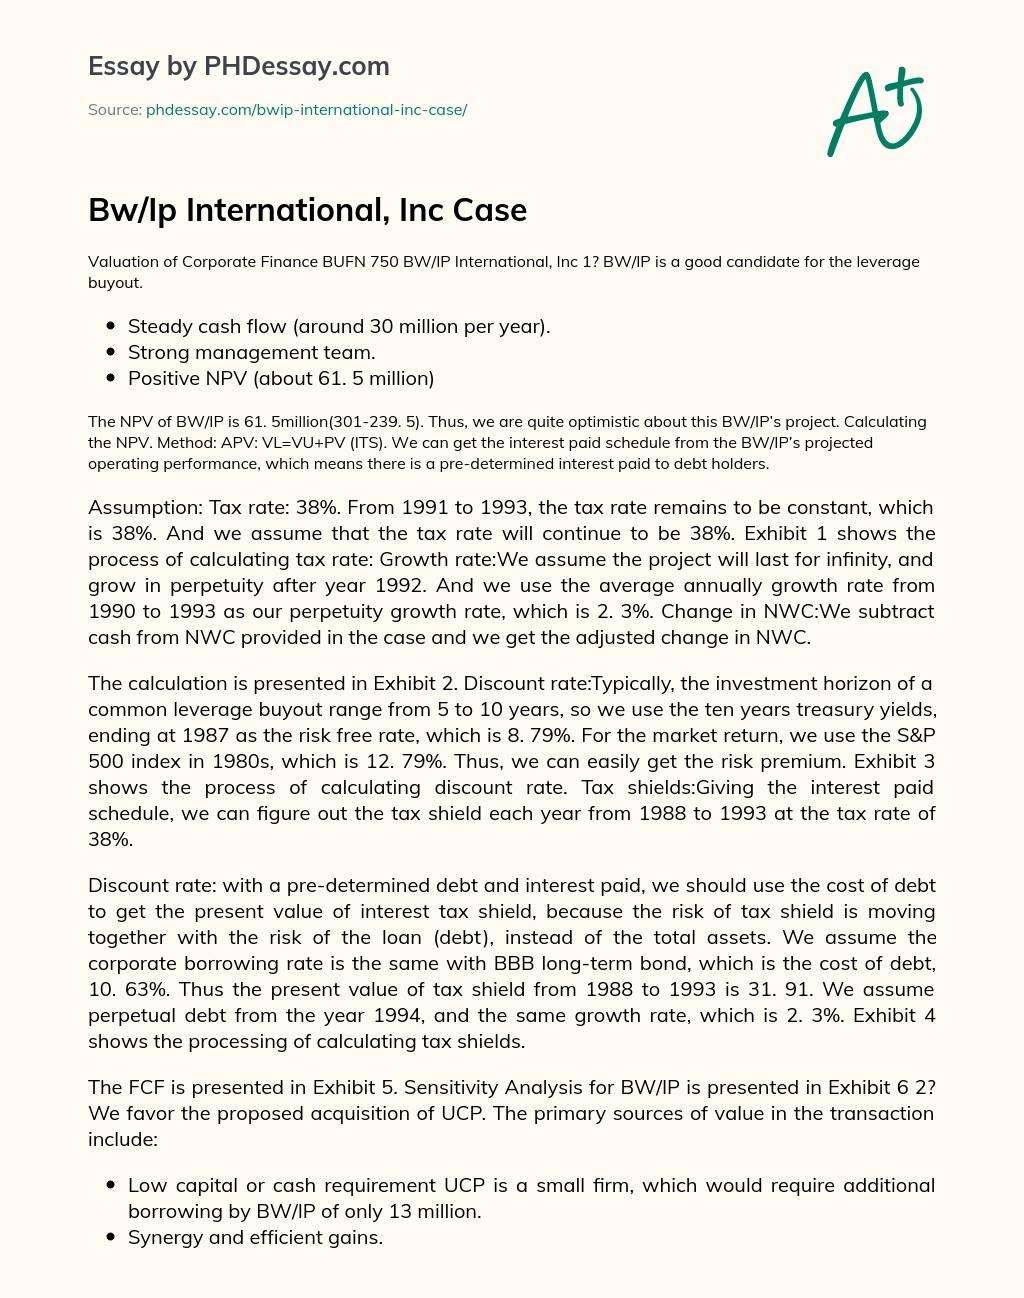 BW/IP International, Inc Case essay